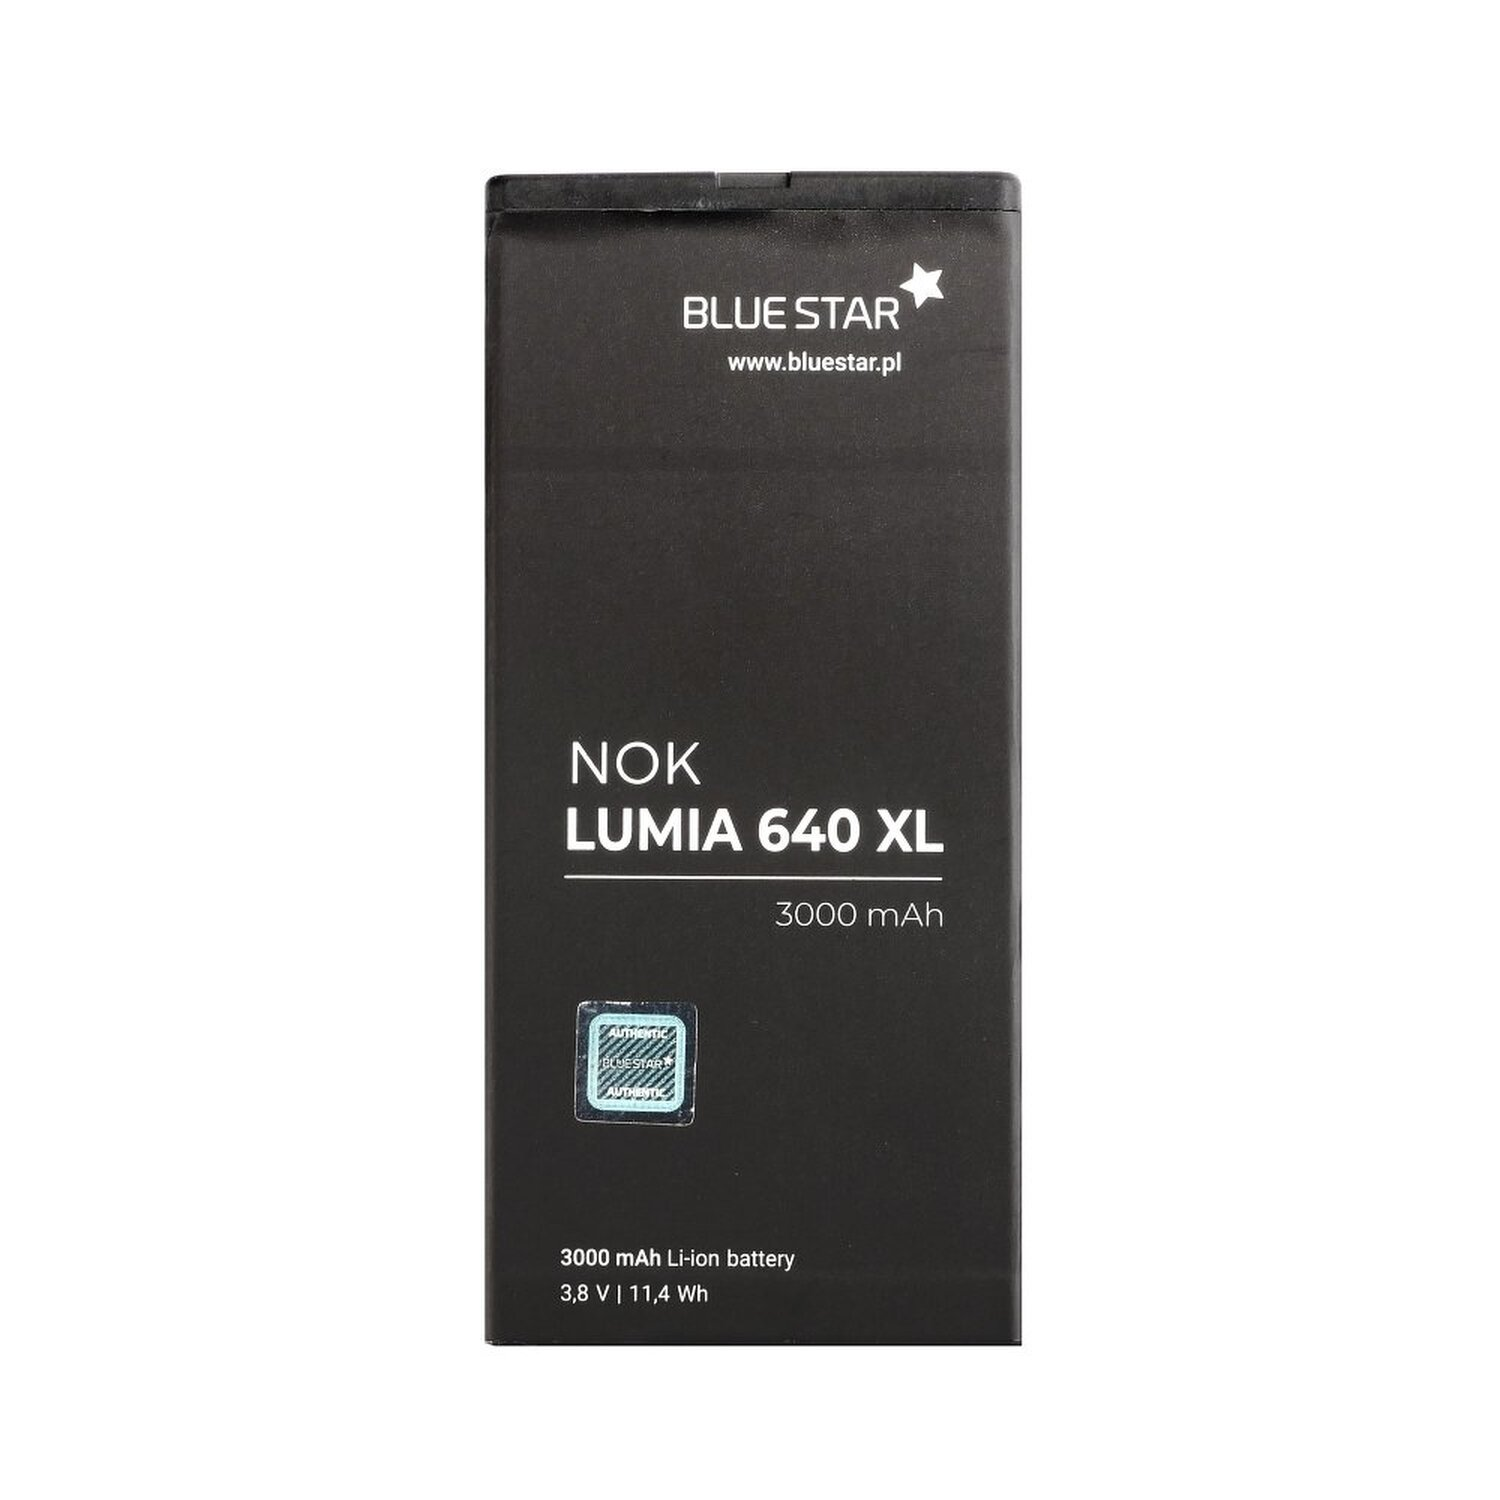 BLUESTAR Akku für Handyakku 640 Nokia Li-Ion Lumia XL